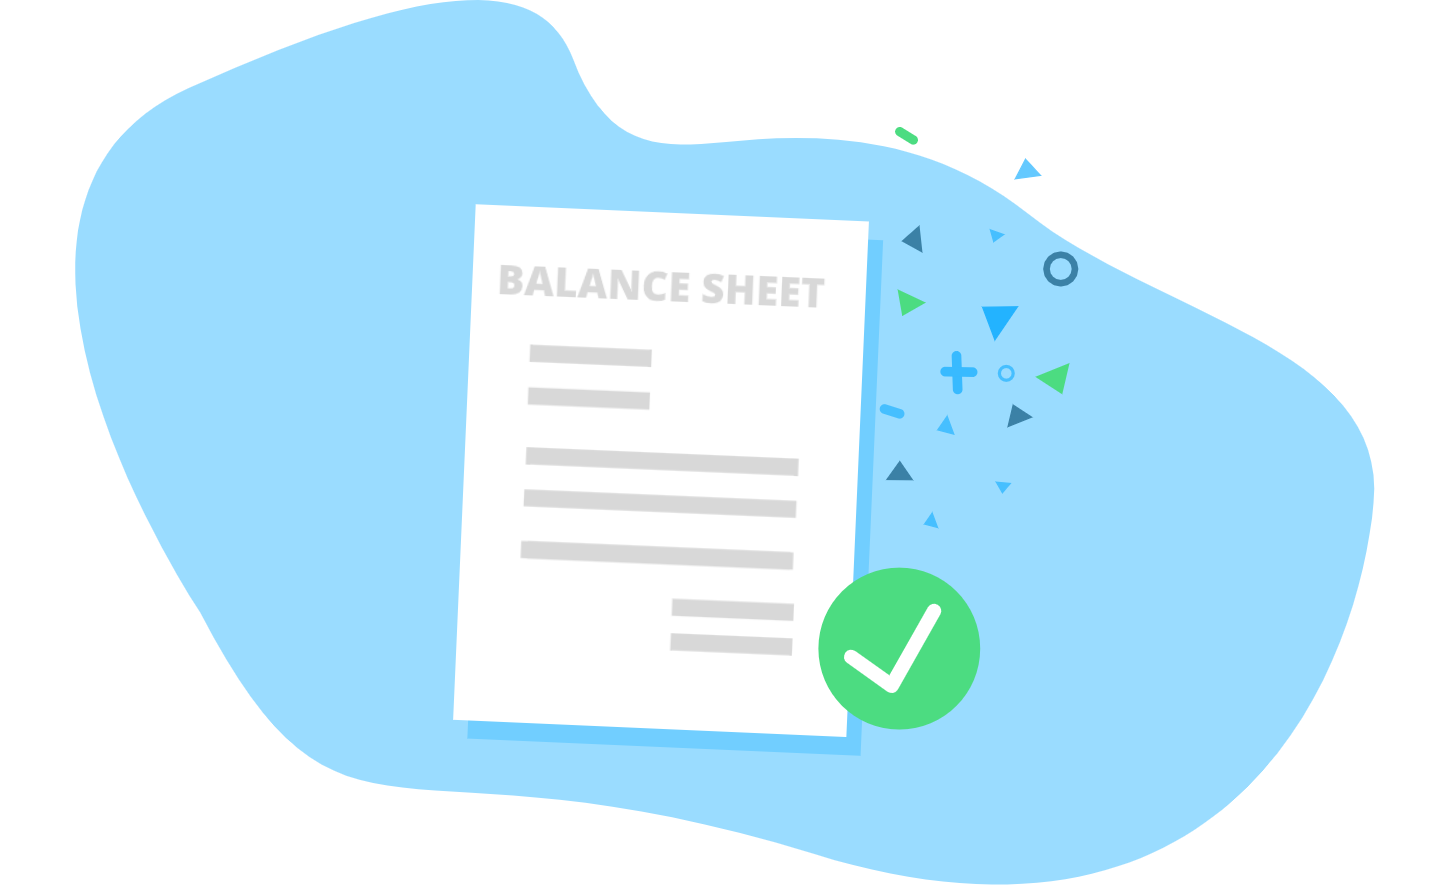 Debitoor financial reporting software helps you create balance sheets.